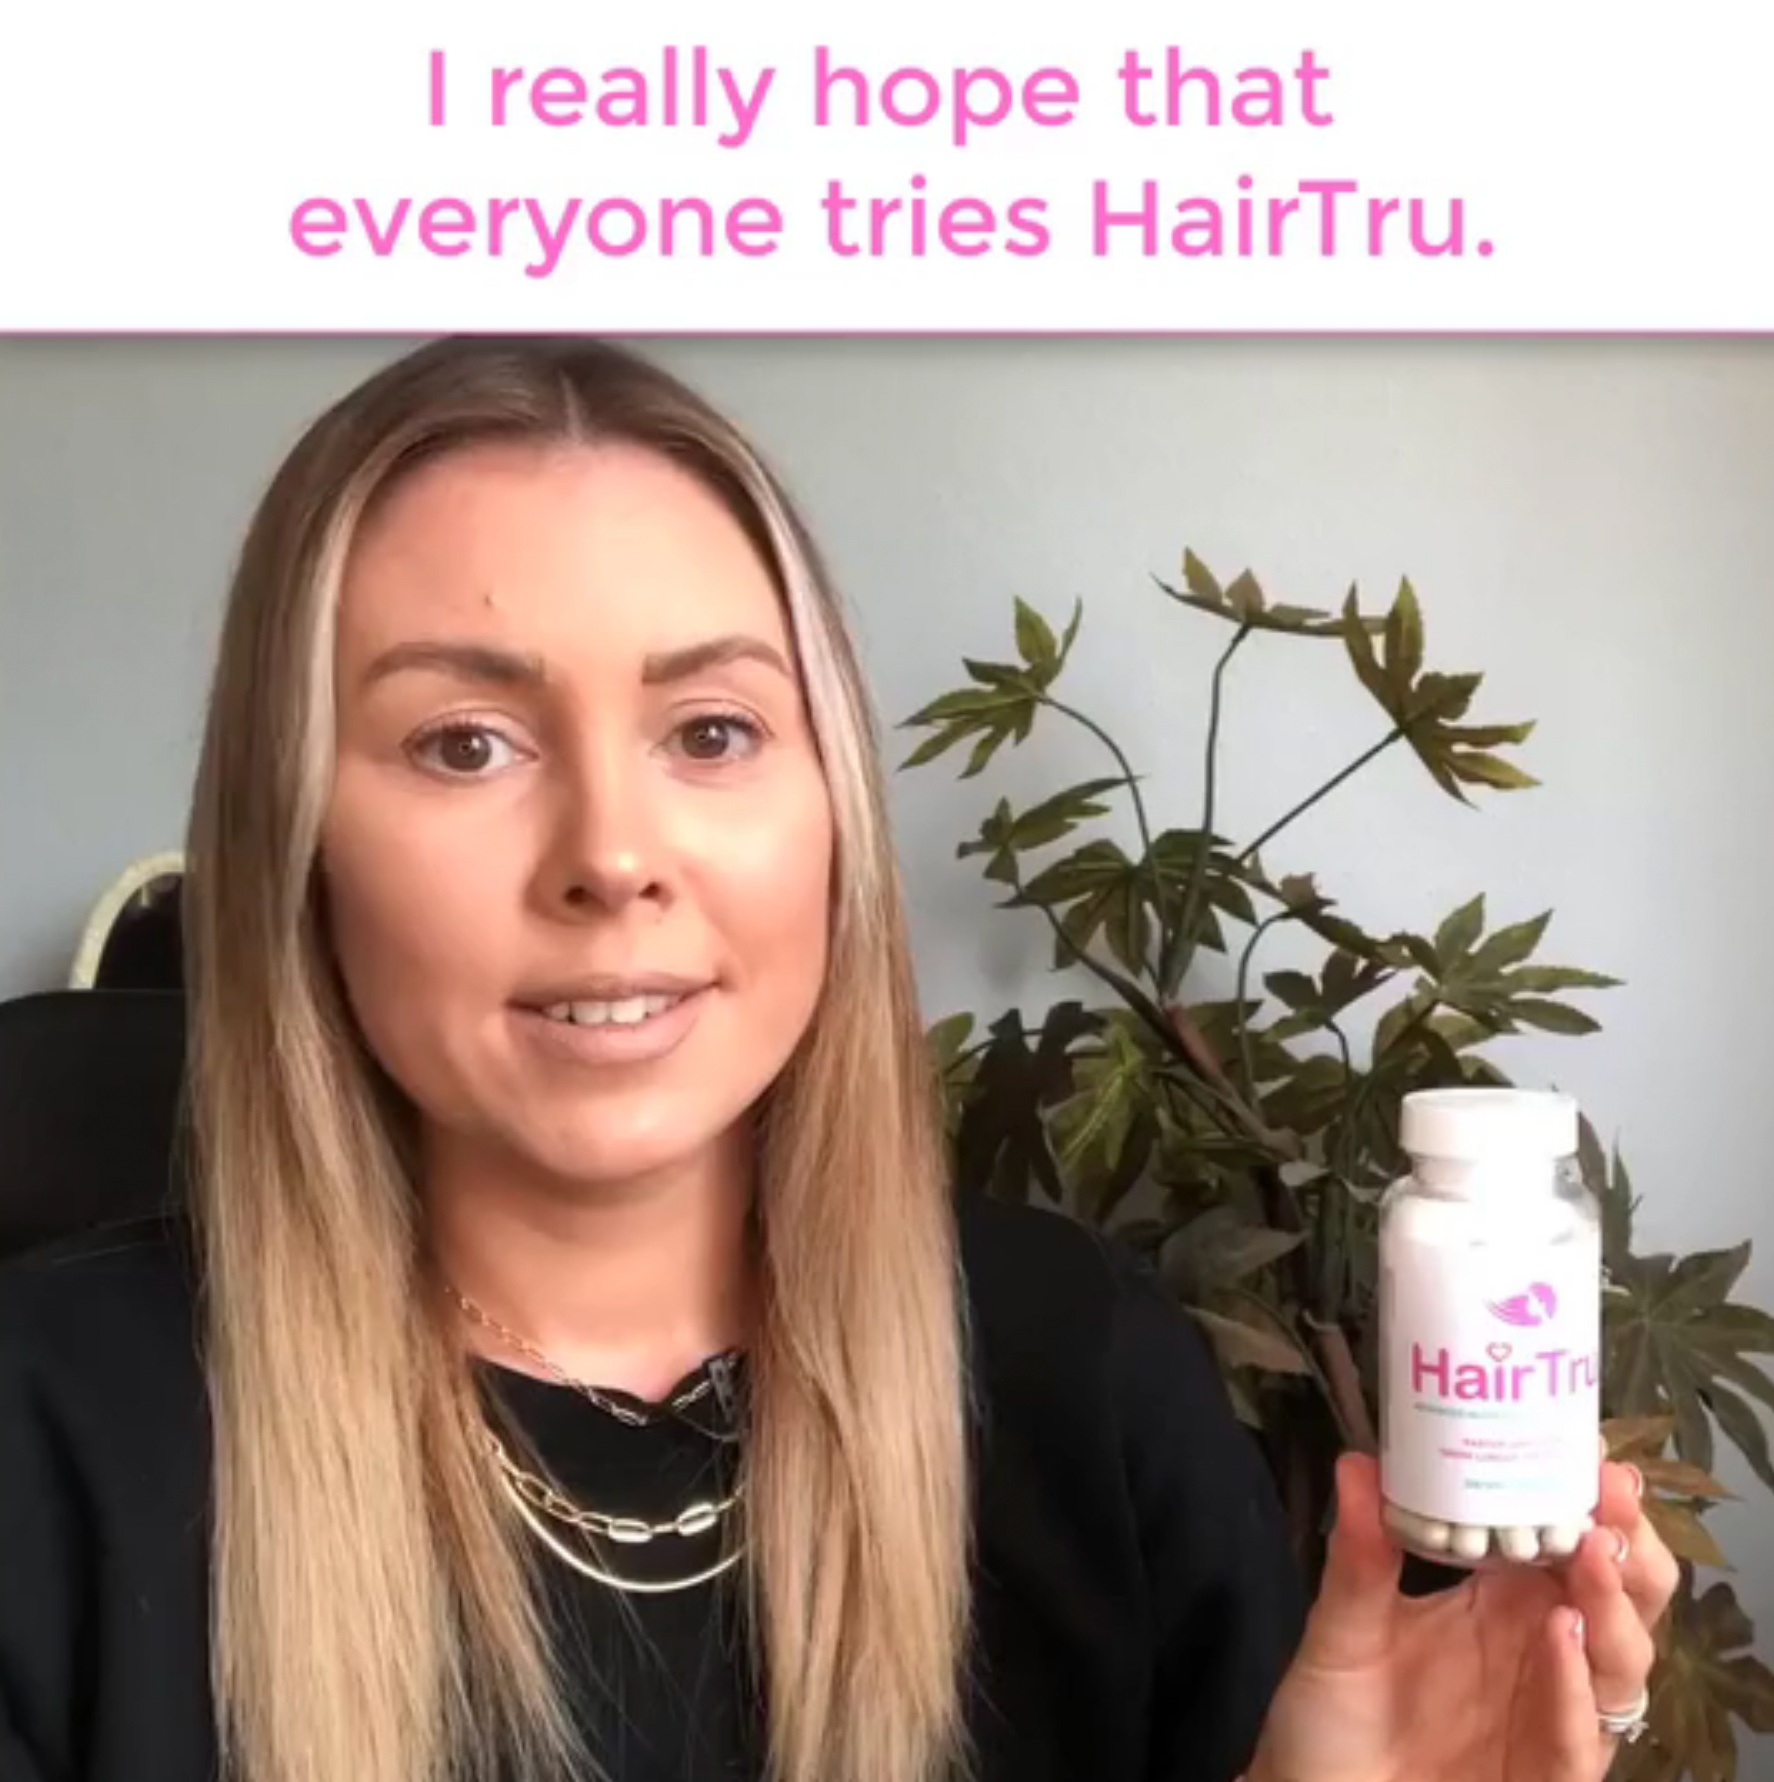 hairtru vitamin reviews